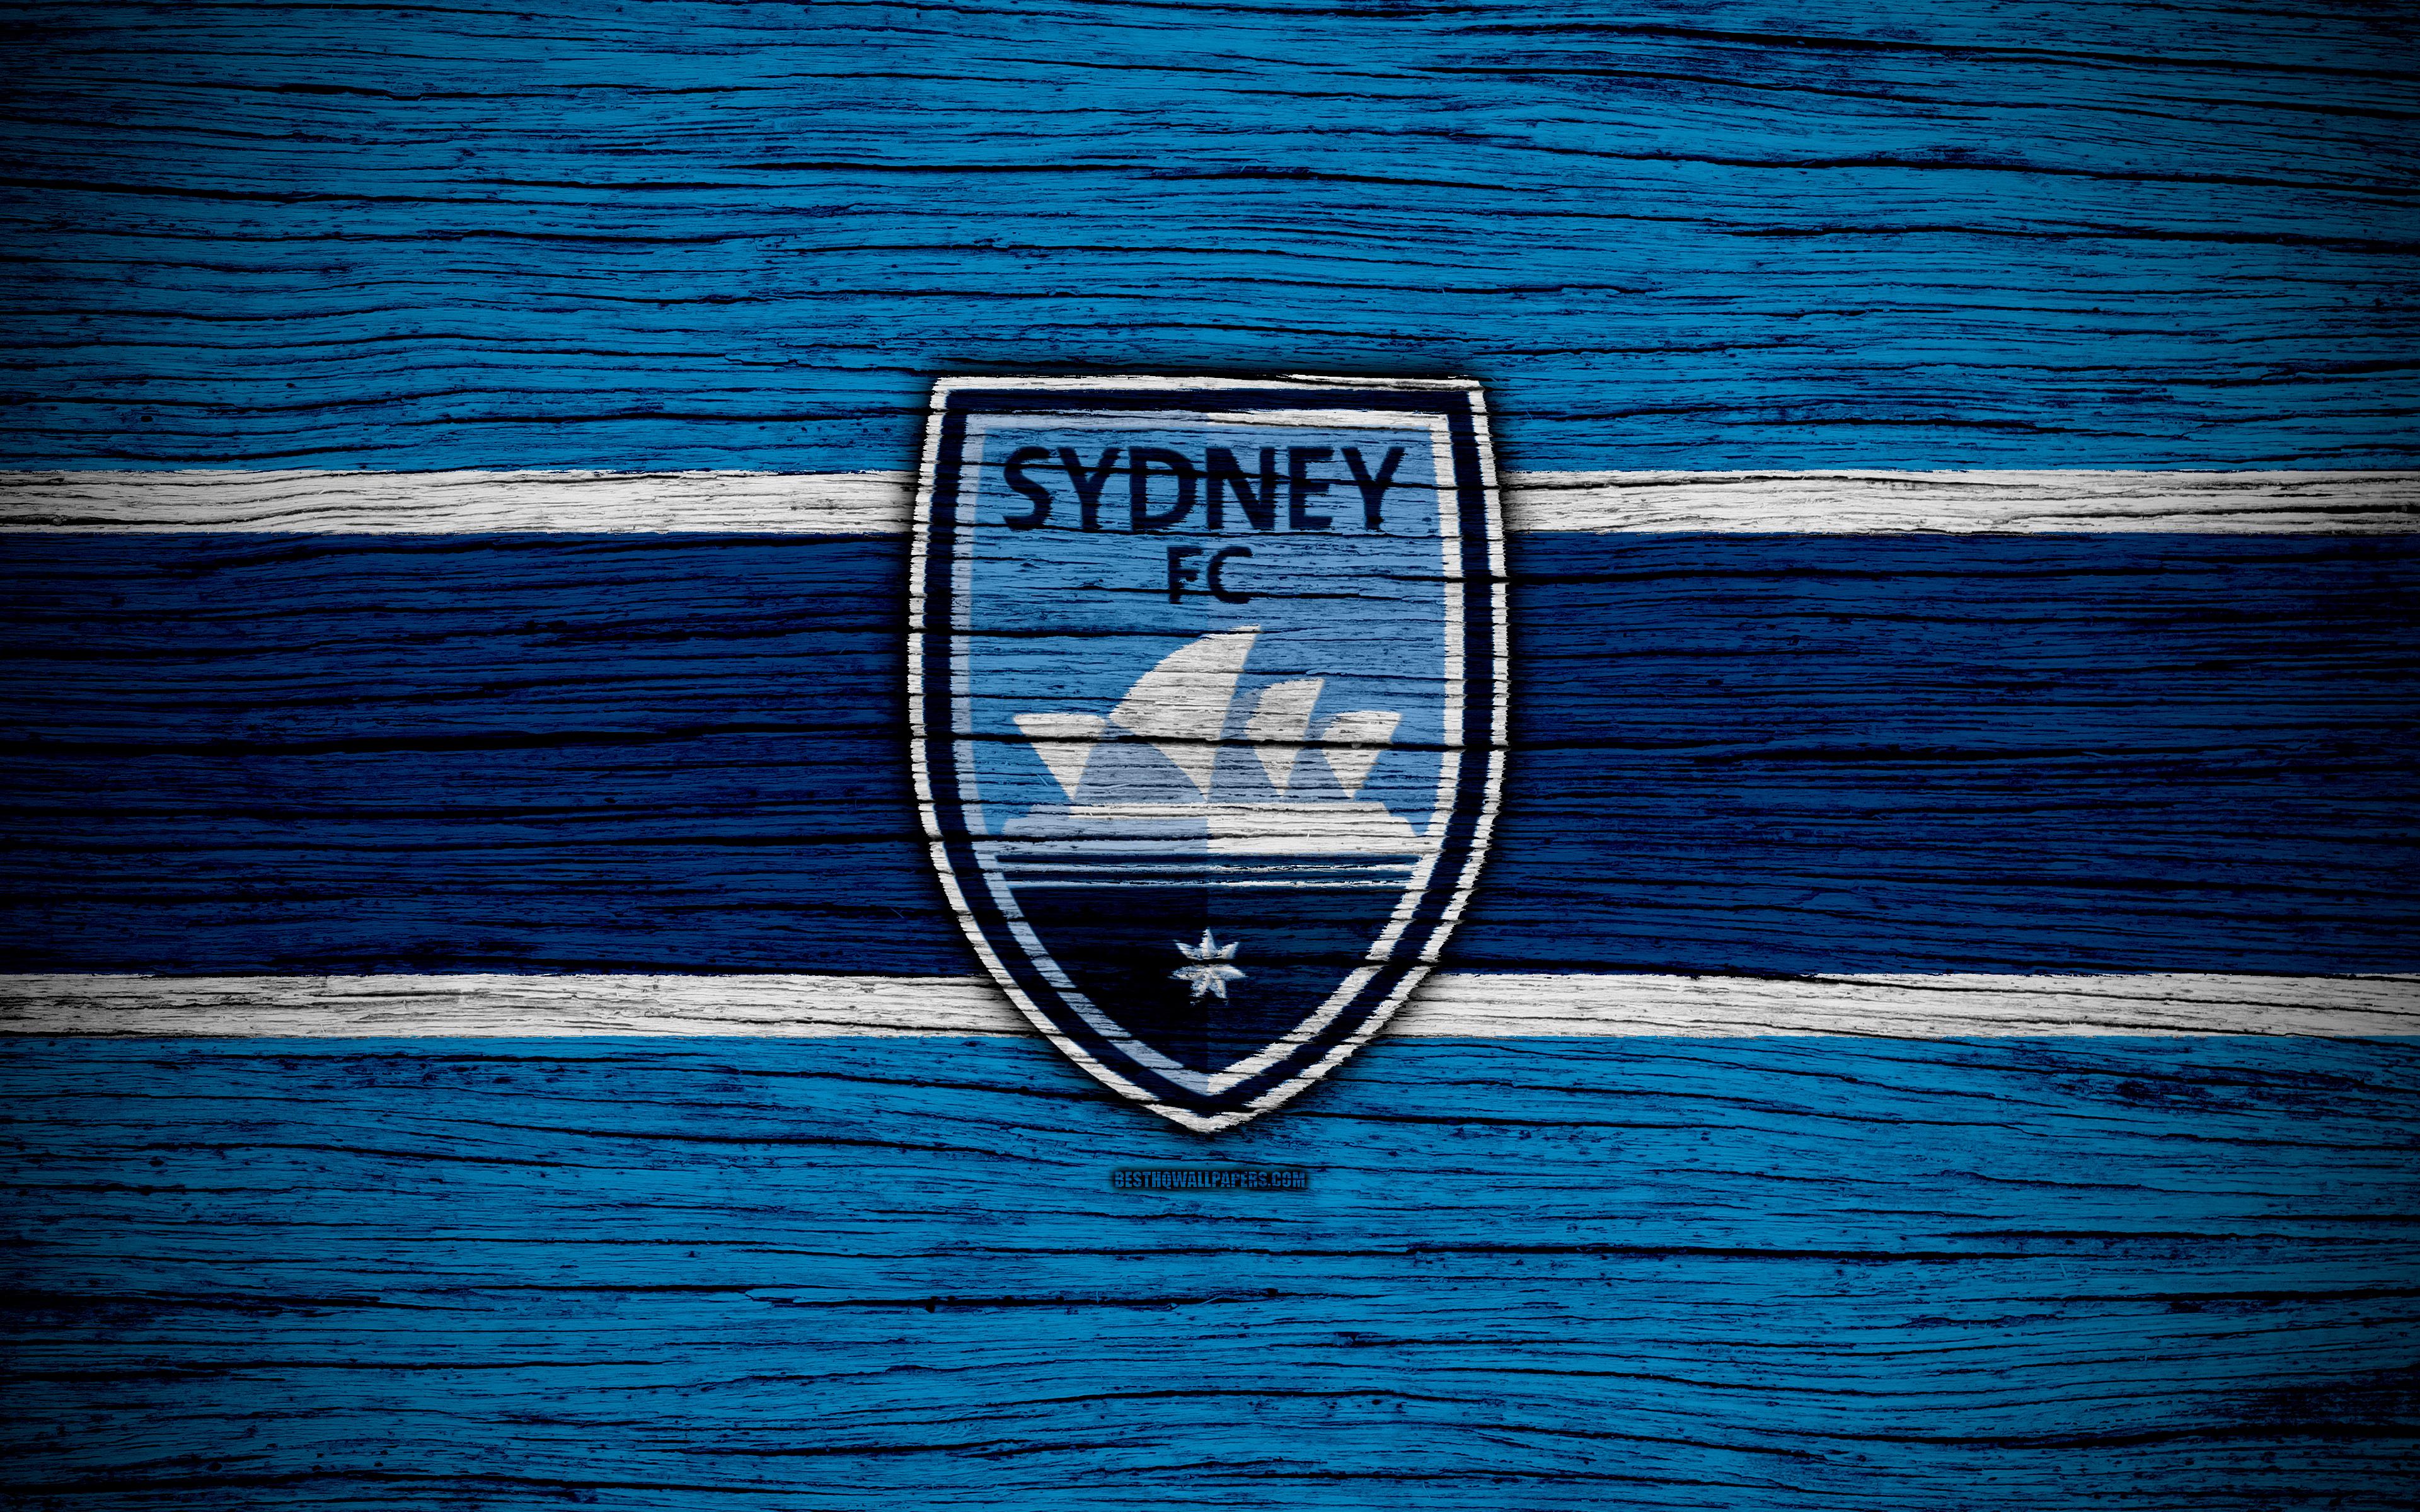 Sydney FC 4k Ultra HD Wallpaper